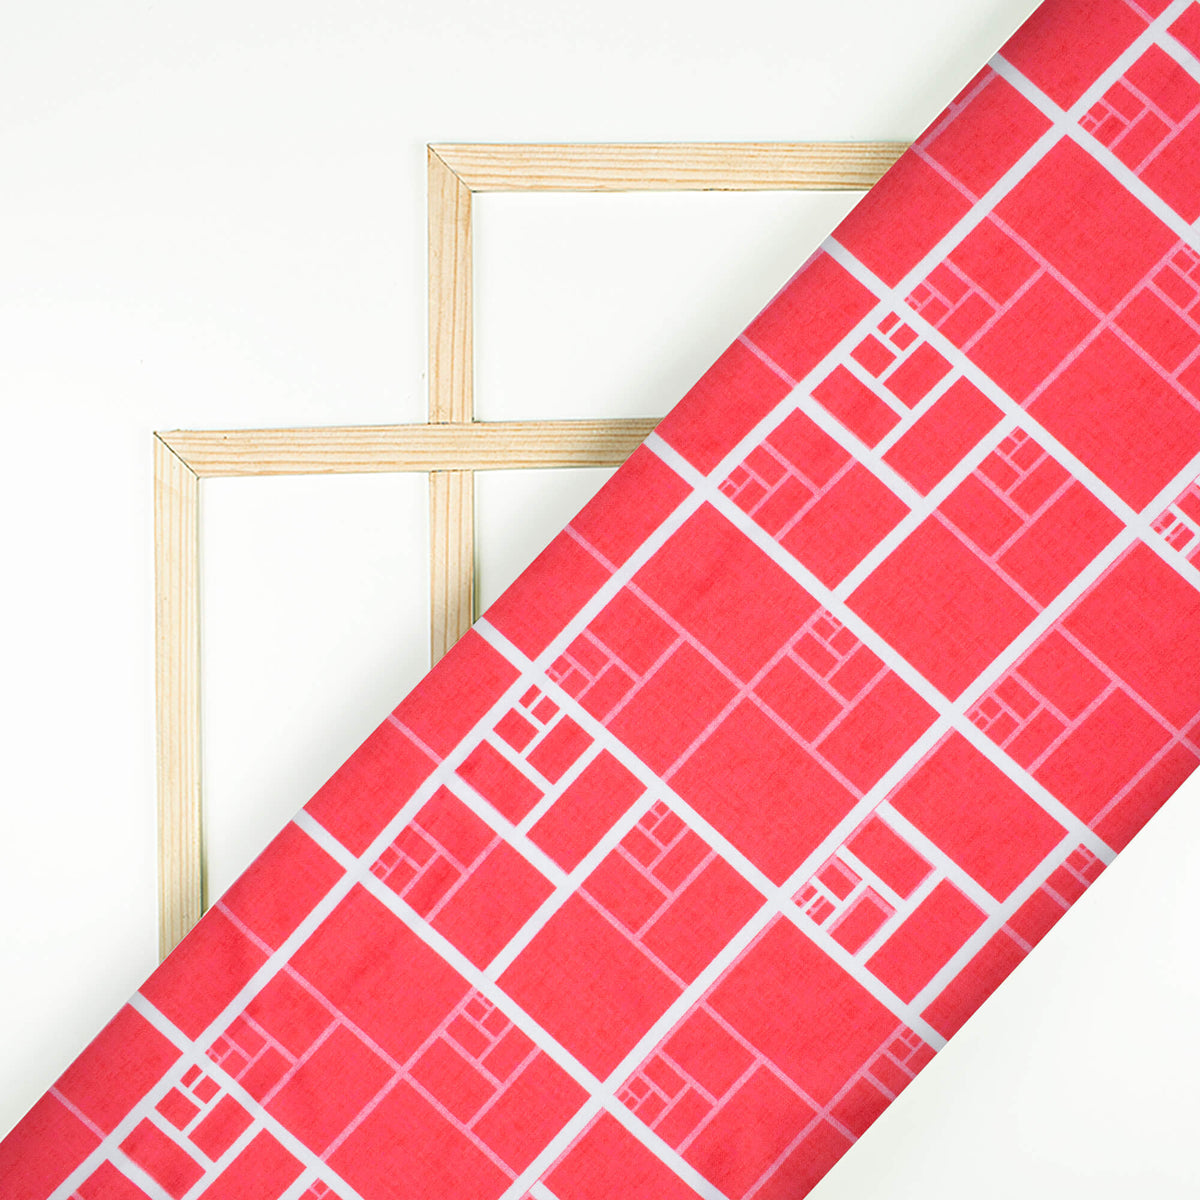 Cerise Pink And White Geometric Pattern Digital Print Crepe Silk Fabric